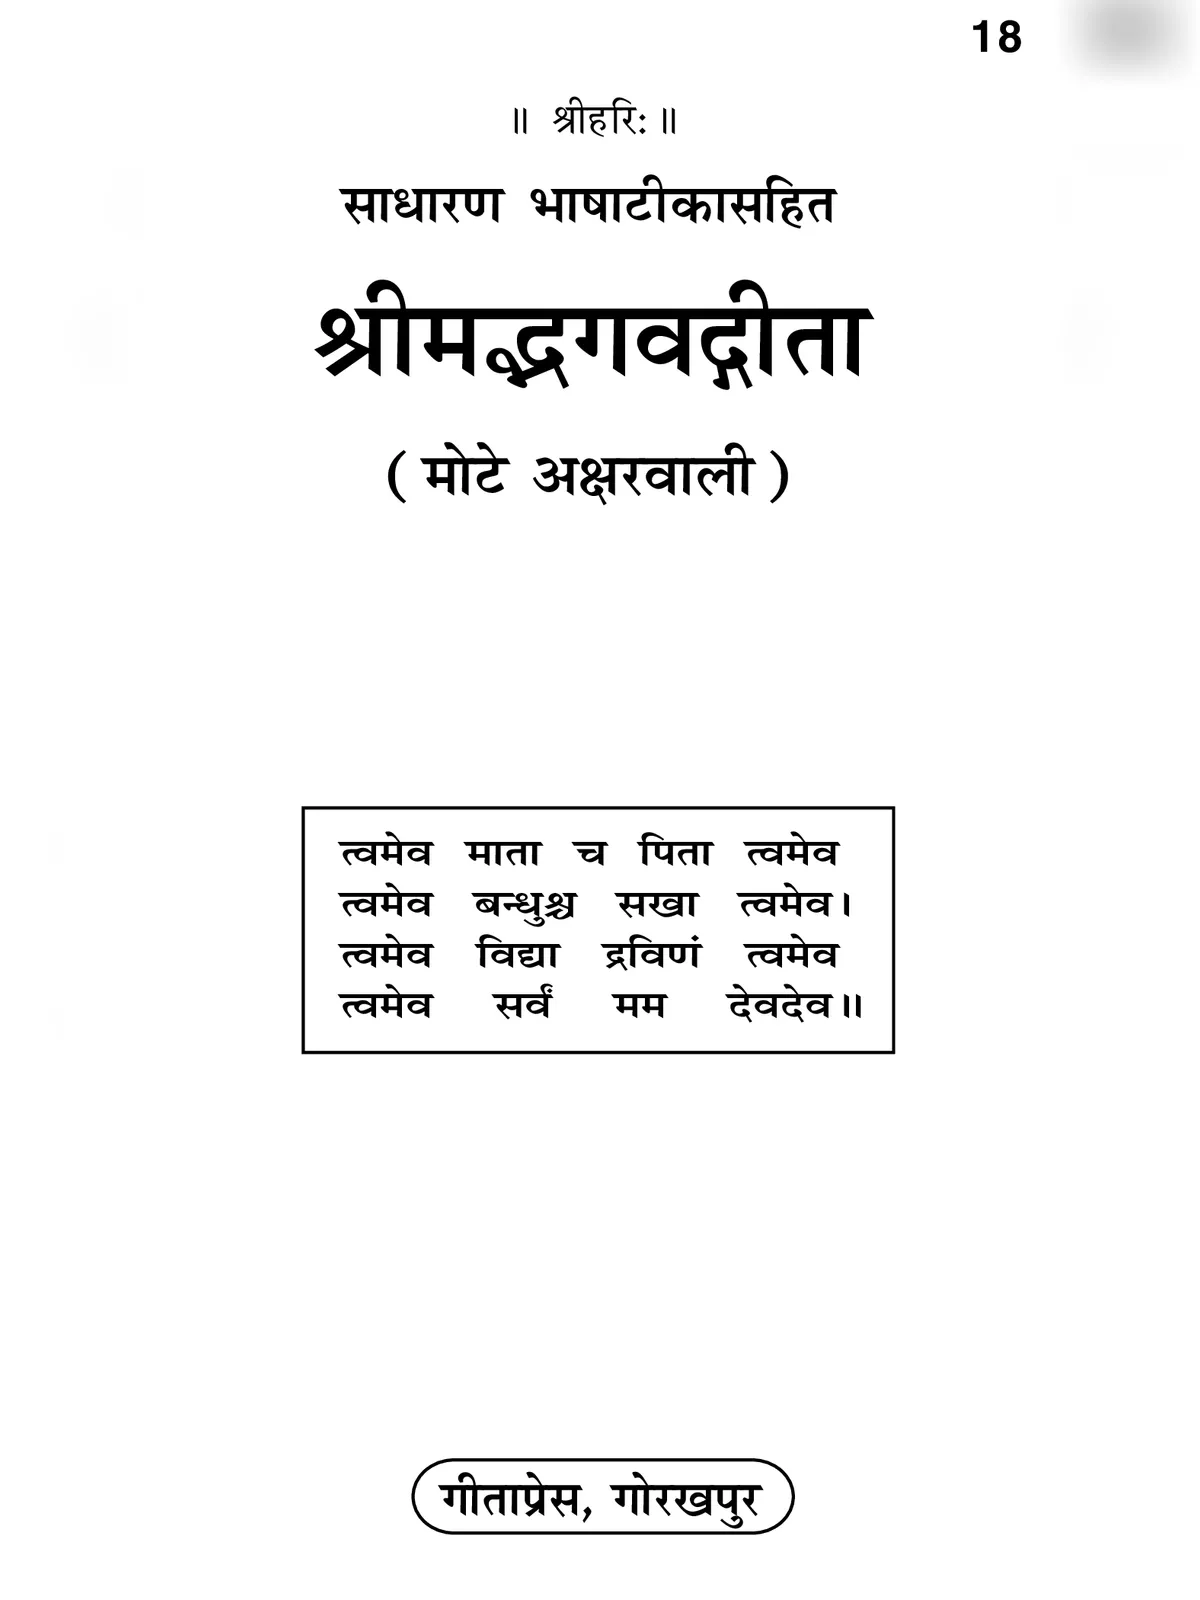 श्रीमद्भगवद्गीता – Srimad Bhagavad Gita by Gita Press Gorakhpur